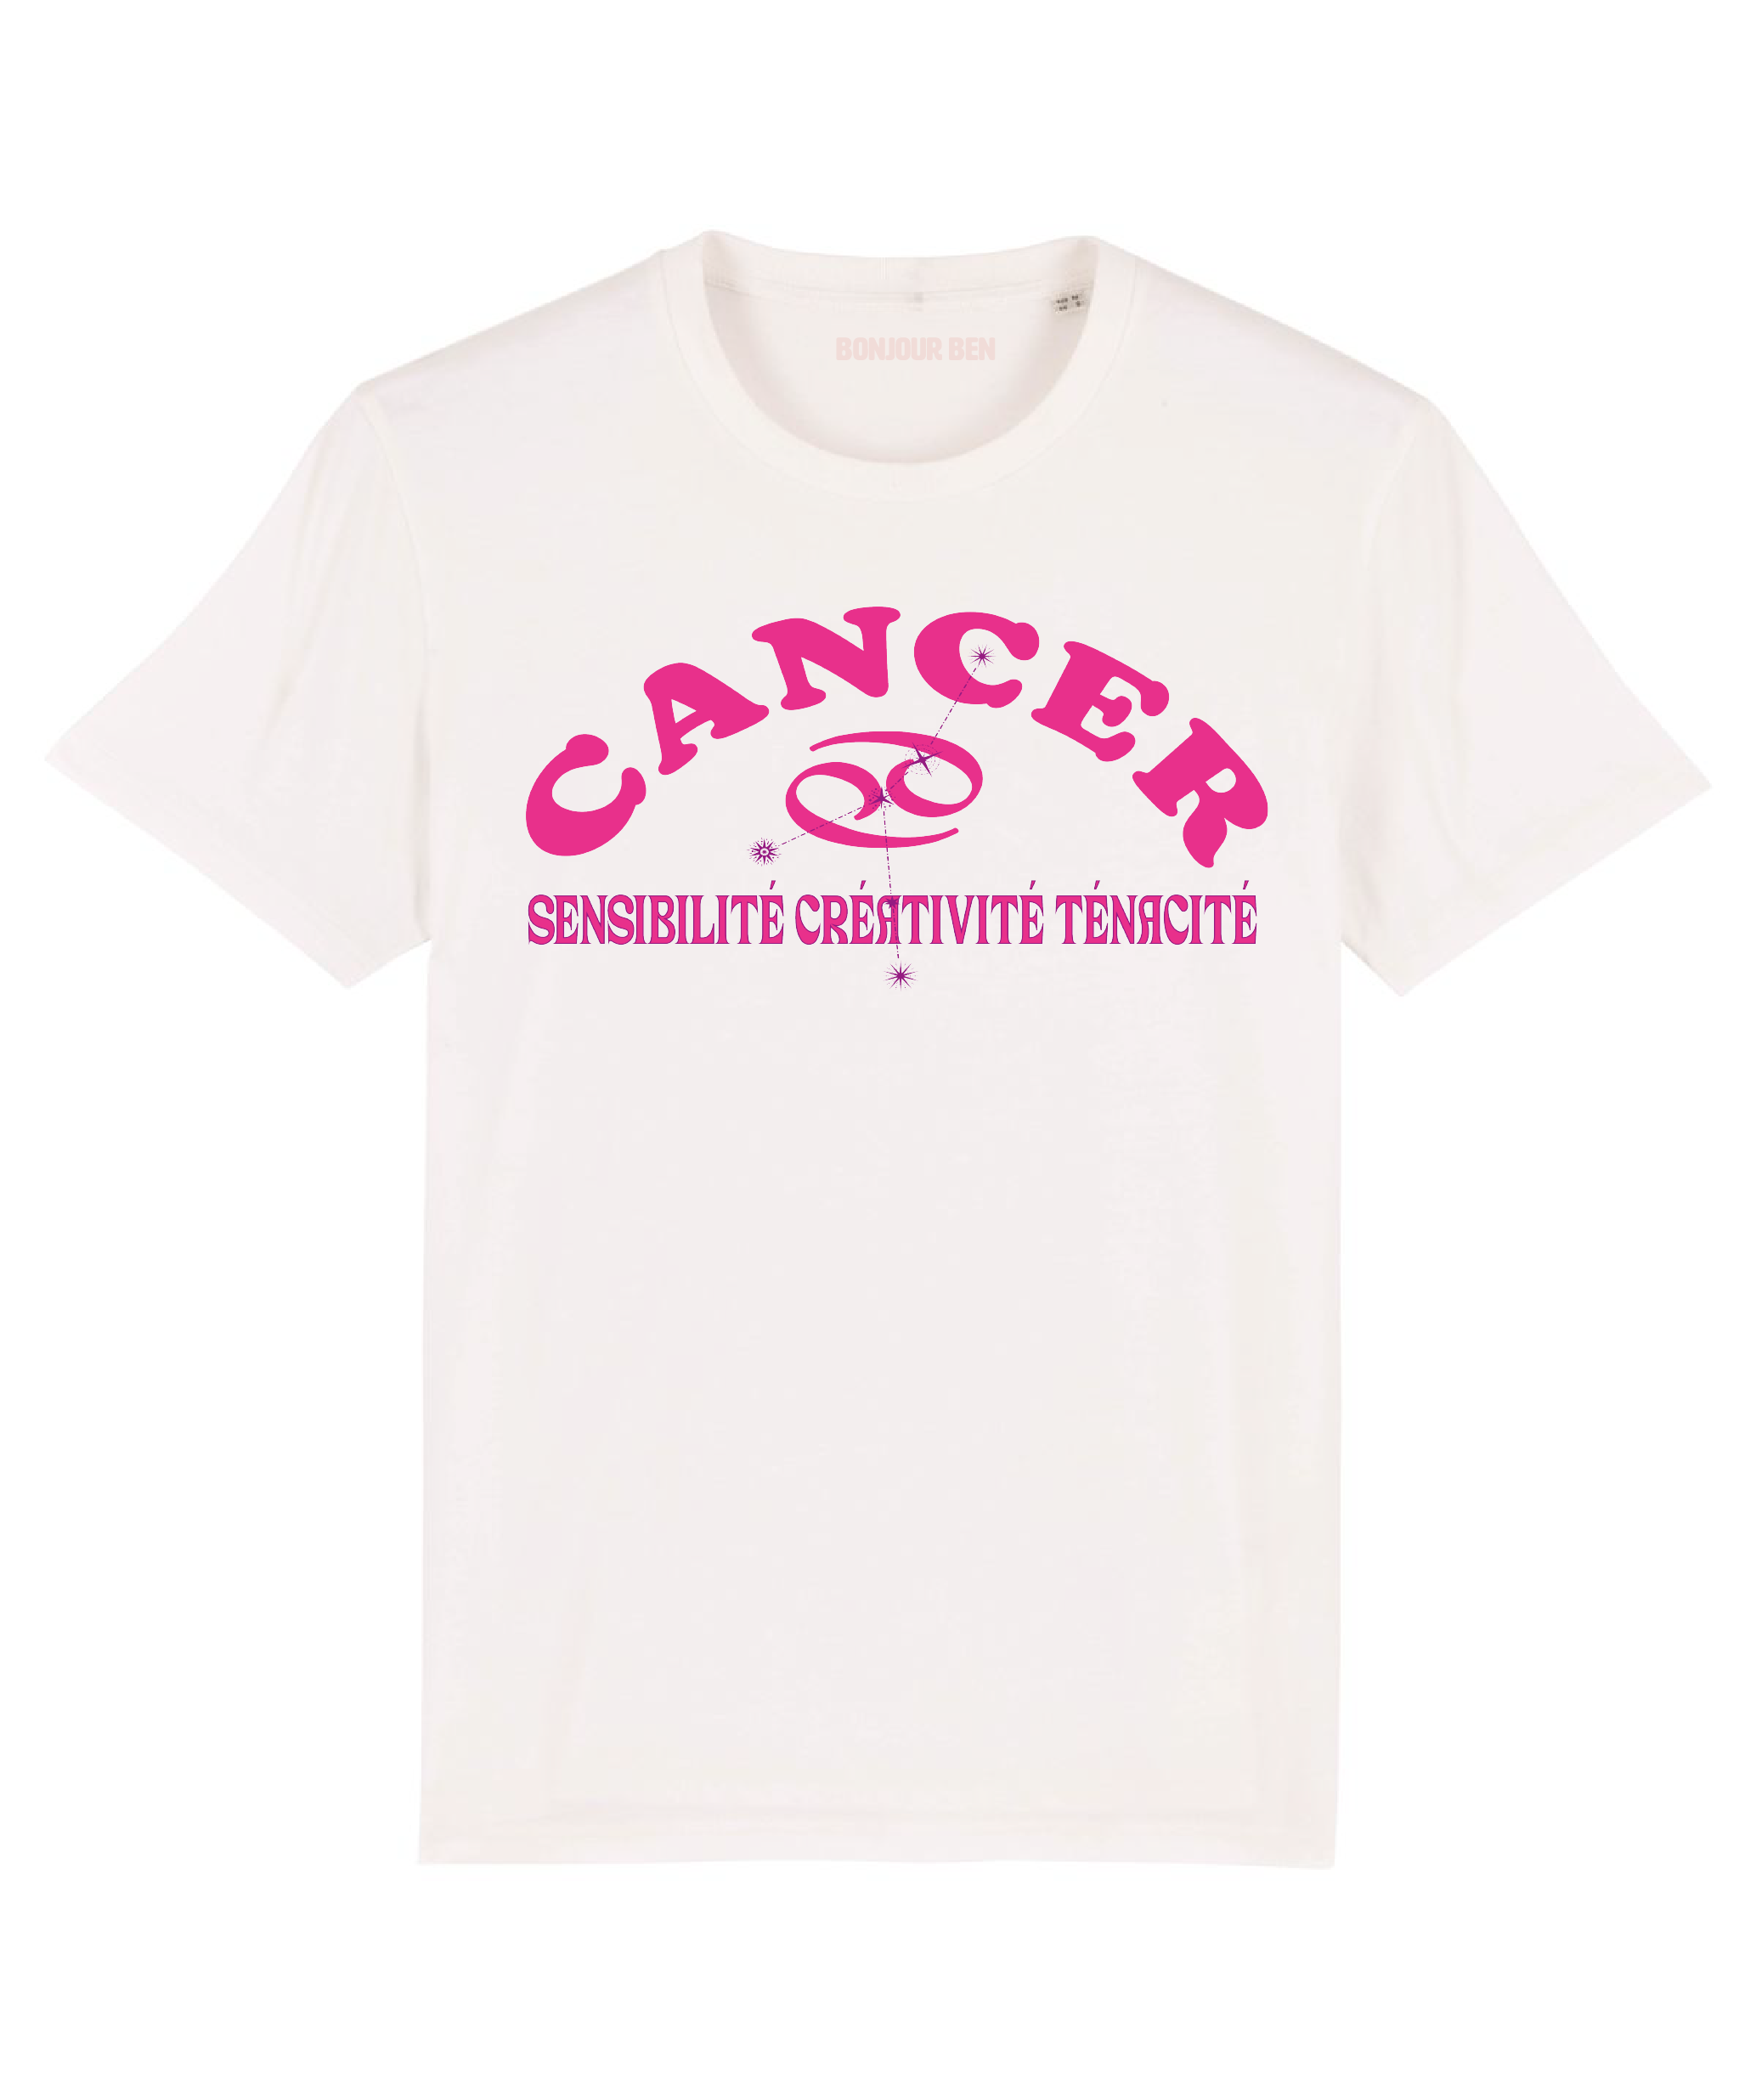 Zodiac signs T-Shirt Cancer - White/Pink